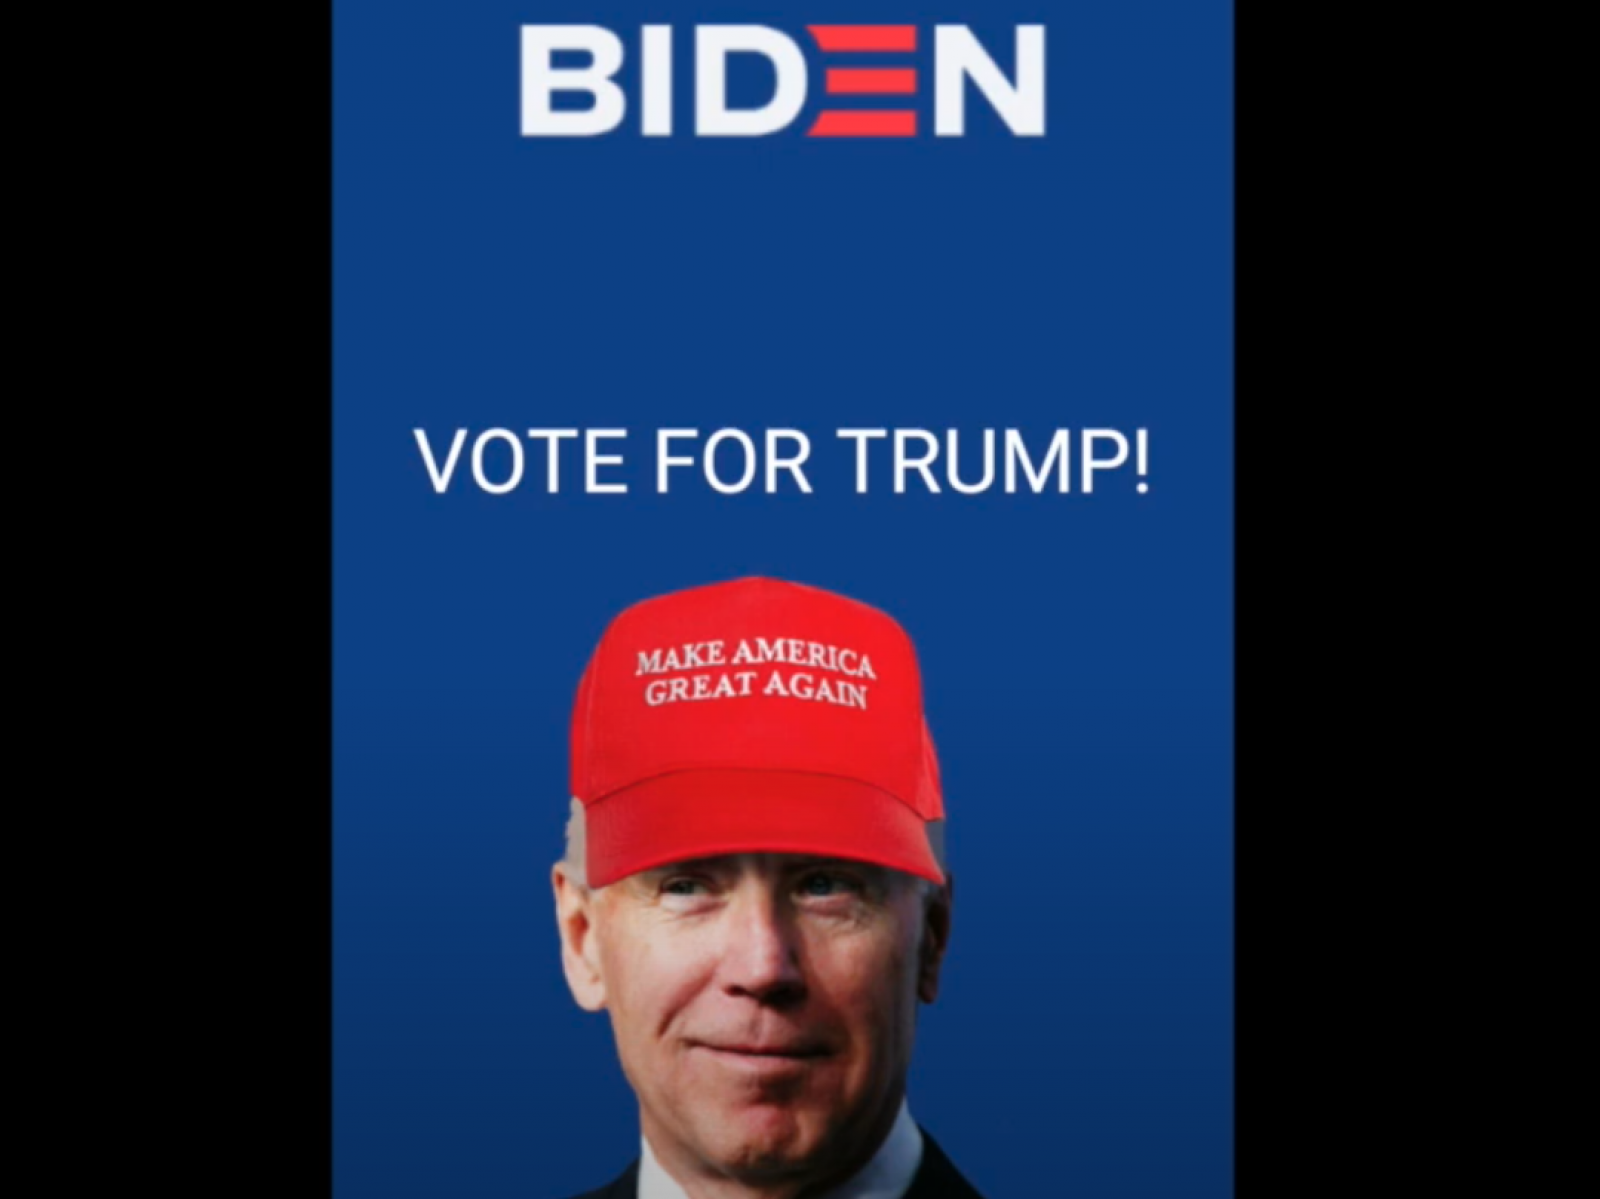 Biden Campaign App Hack Shows Him Wearing Maga Hat Telling